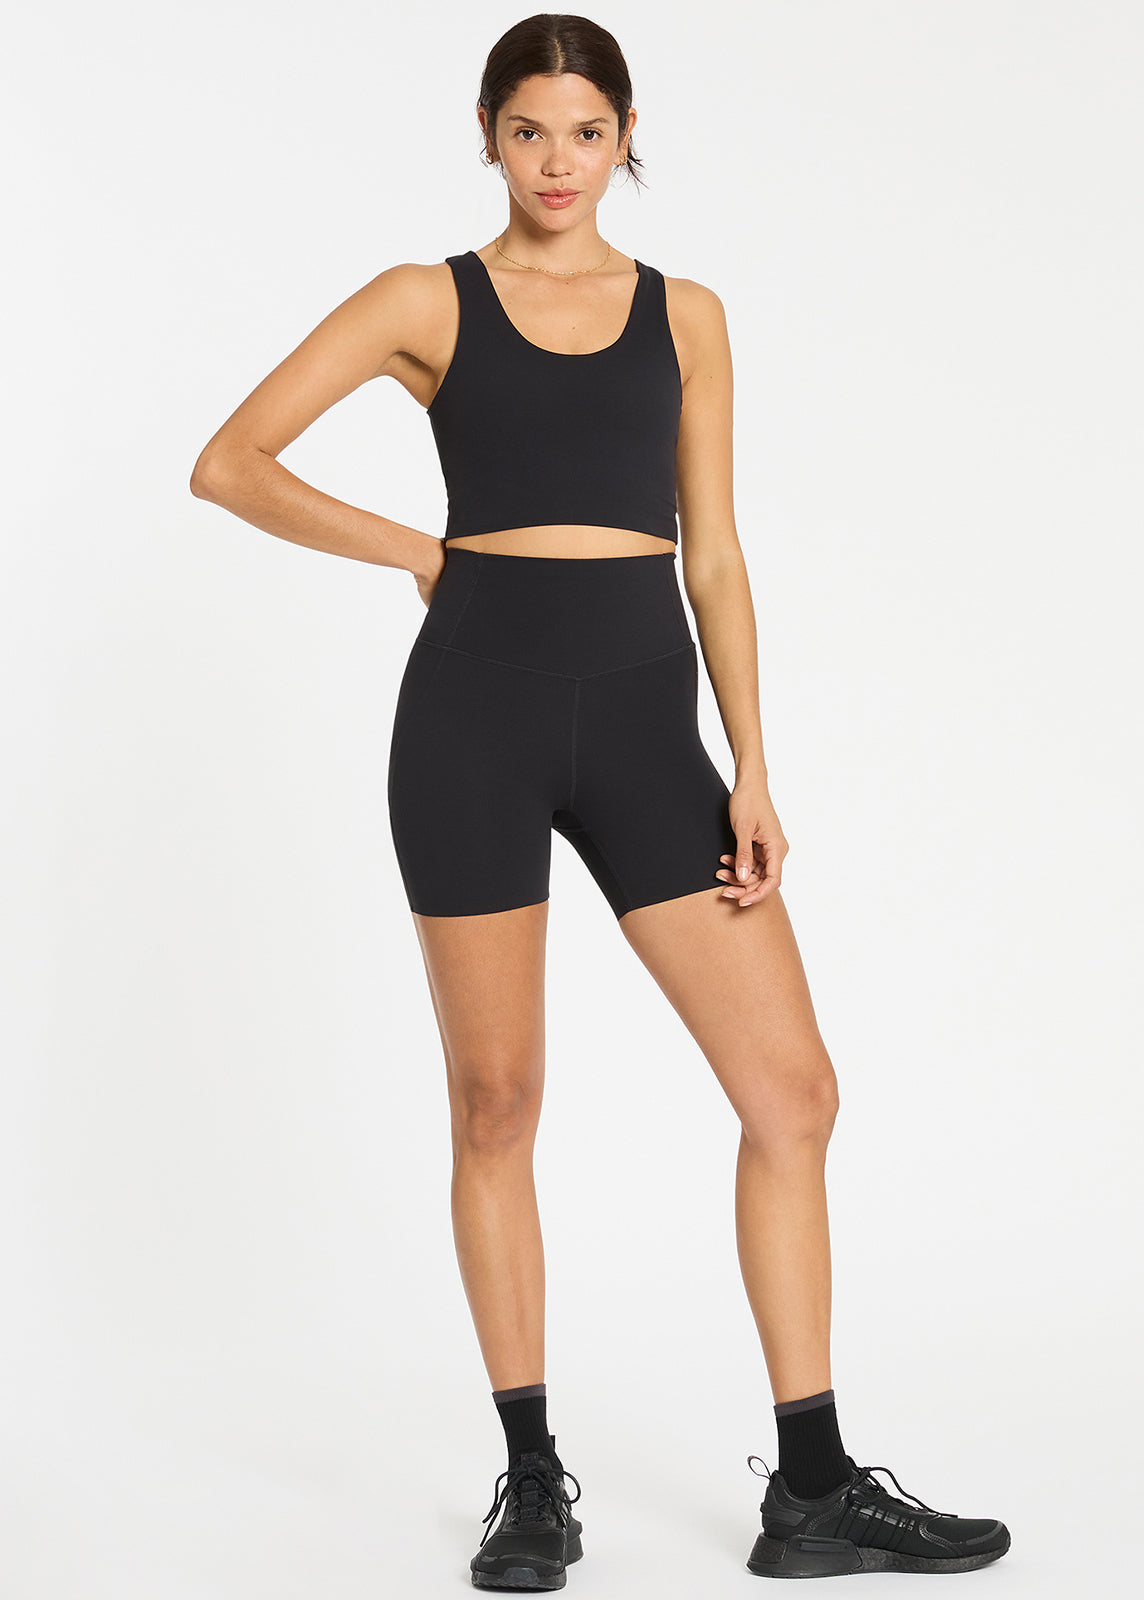 Girls Bike Shorts & Running Shorts - Black - Impi Sportswear